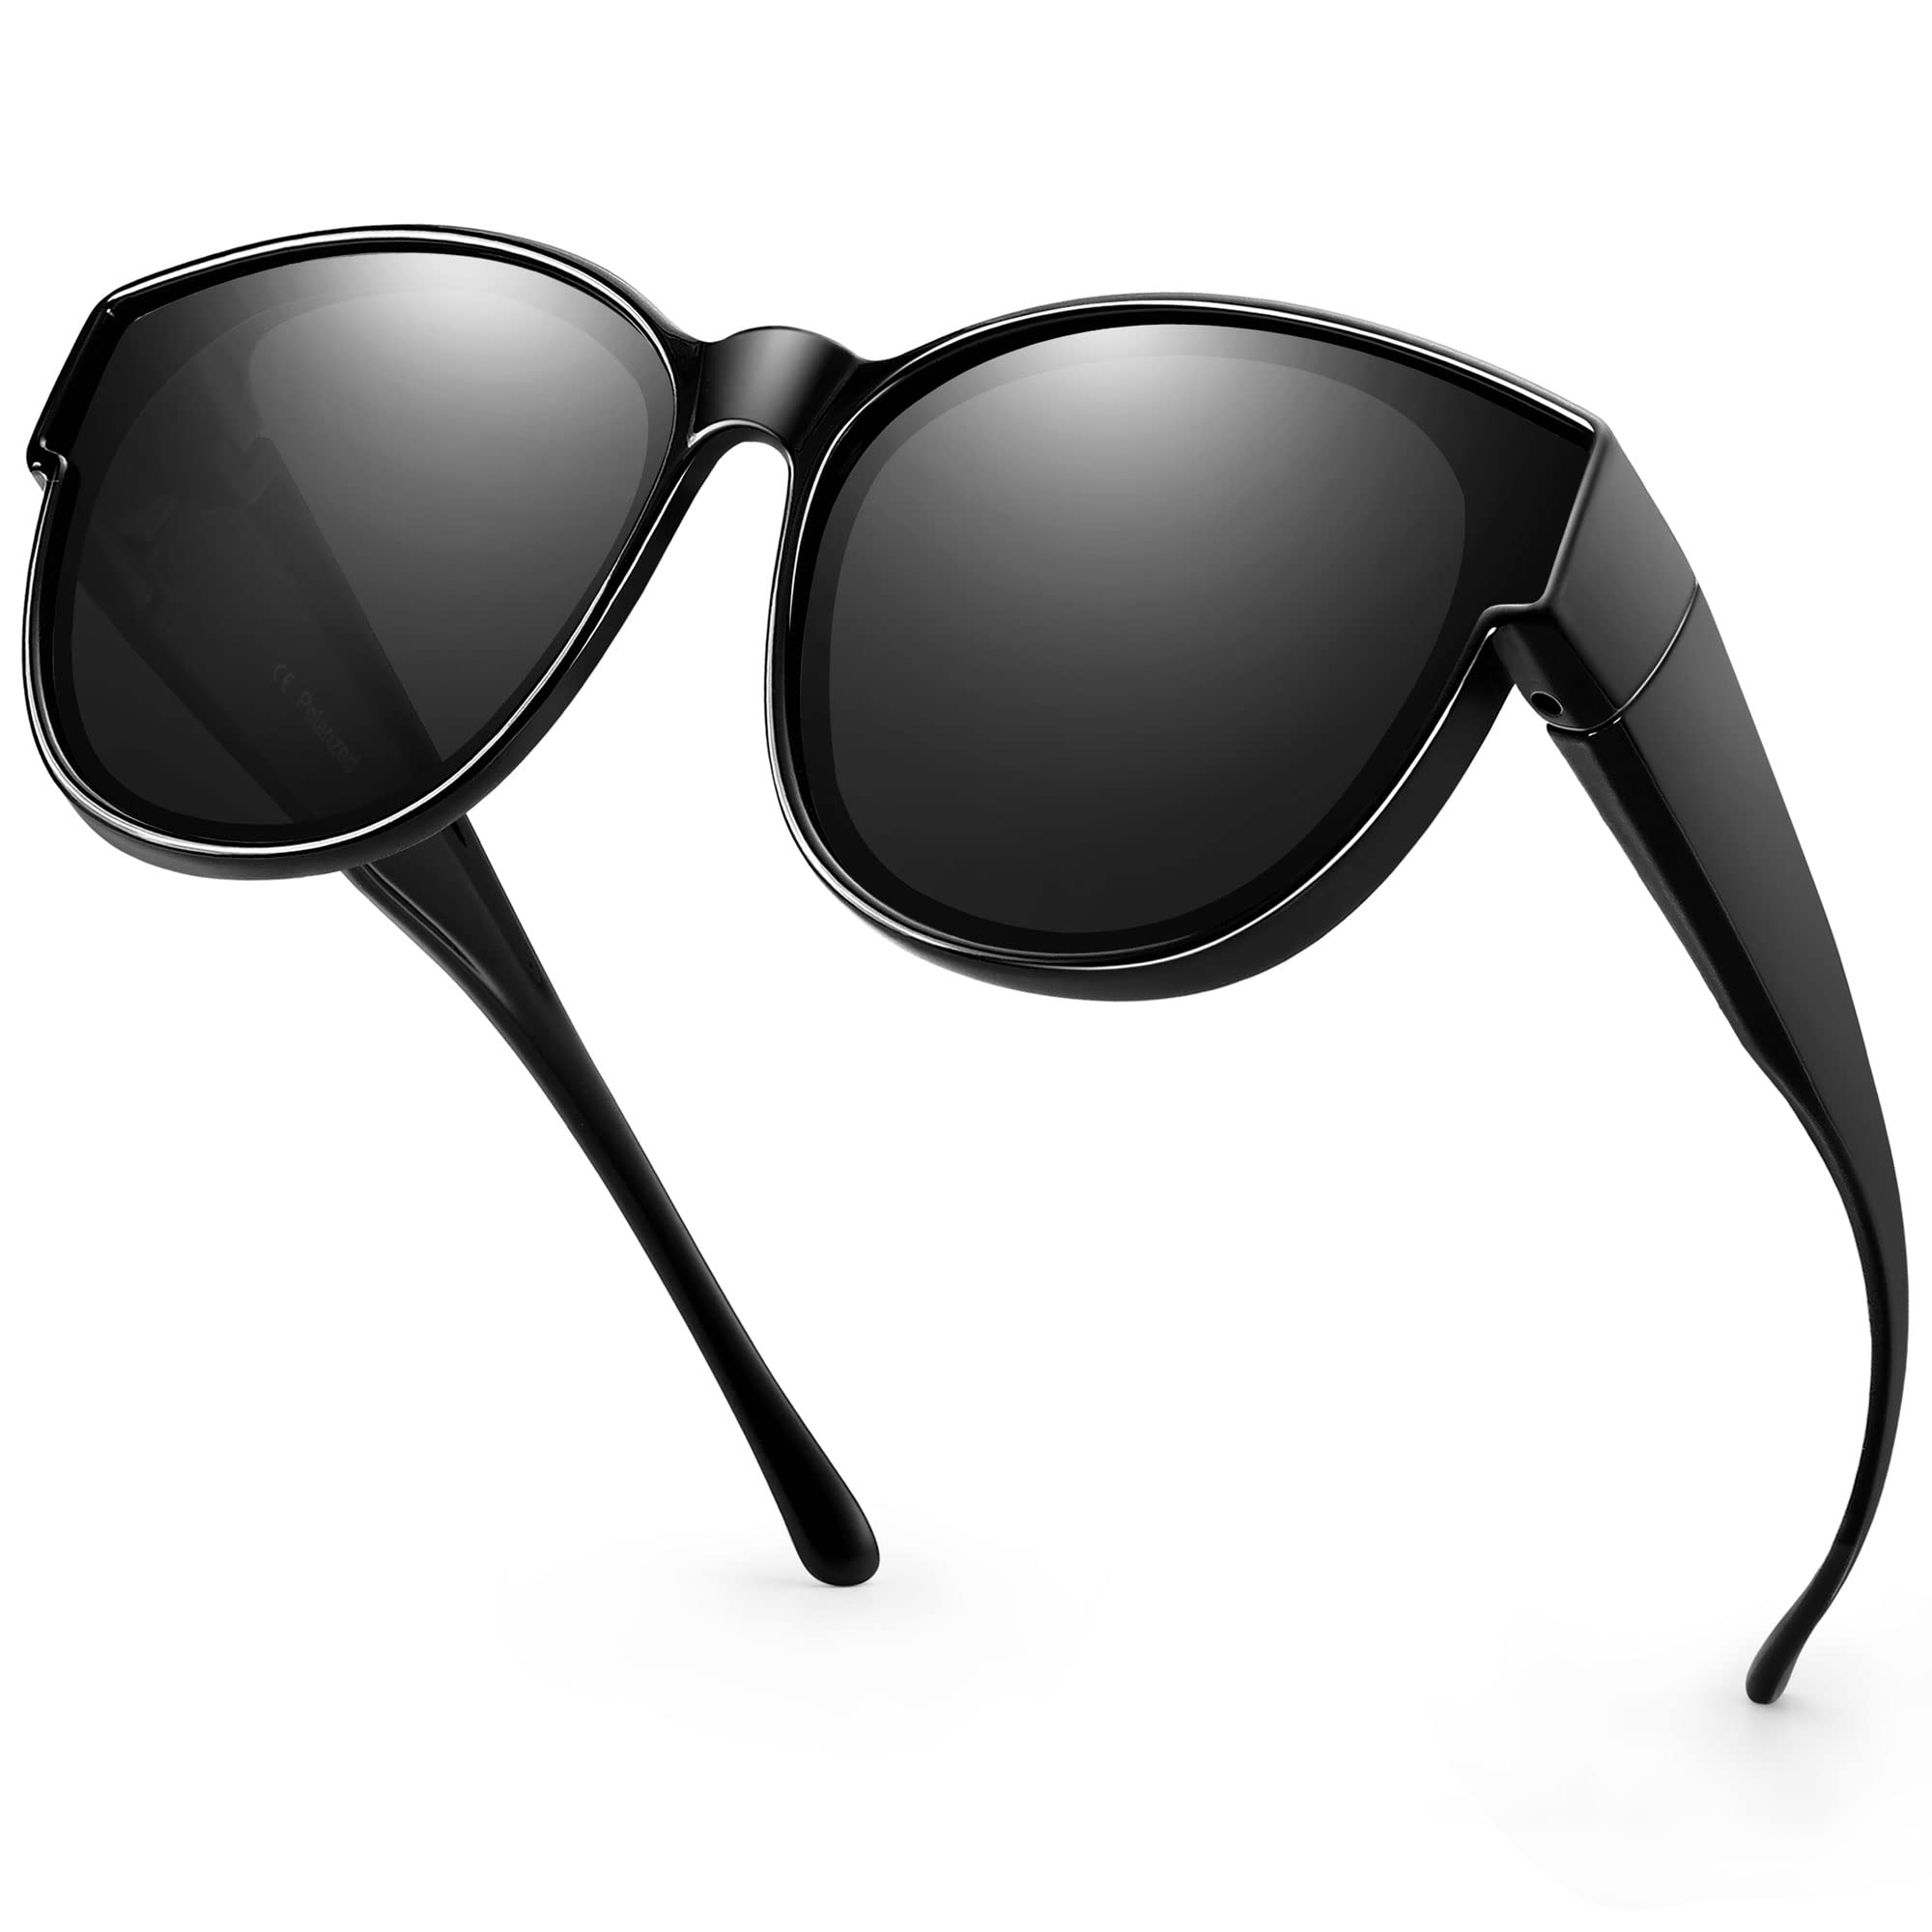 URUMQI Oversized Polarized Sunglasses Fit Over glasses for Women, Trendy cat Eye Sunglasses Extra Large Lens UV400 Protection